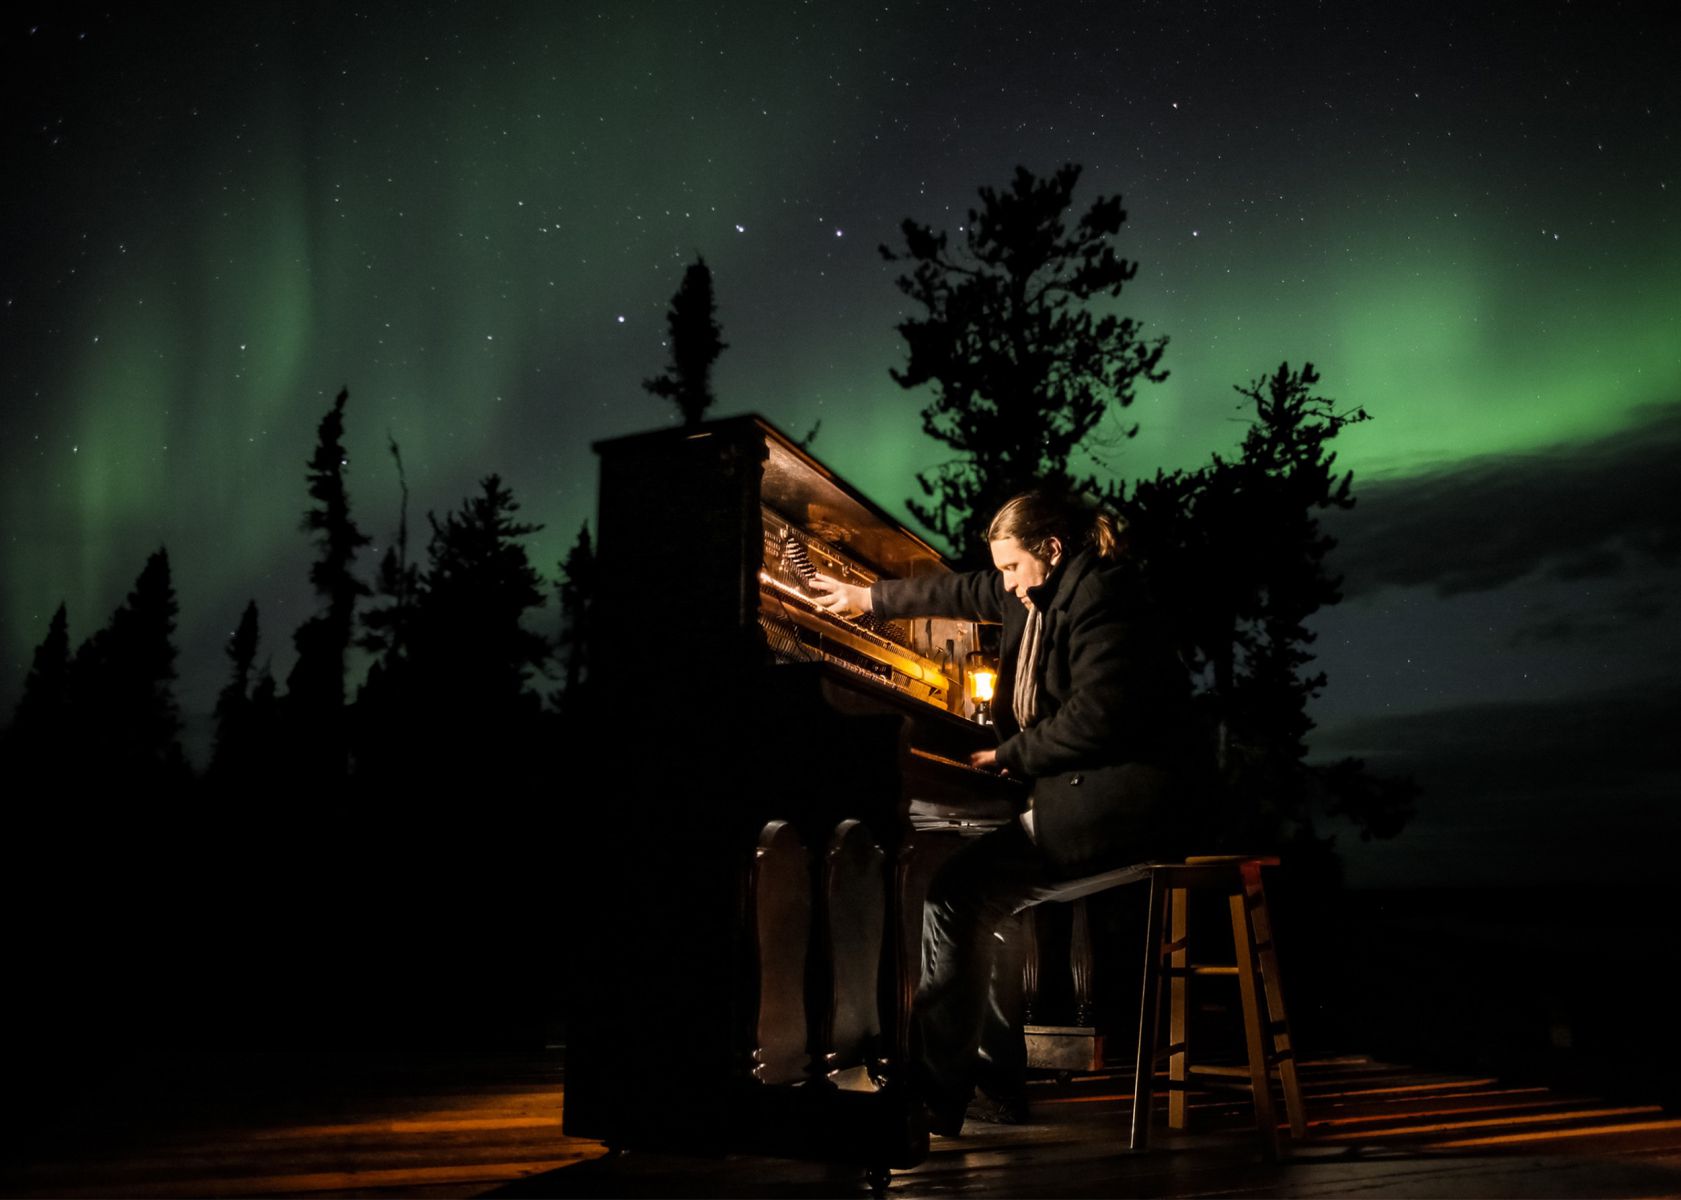 Roman Zavada speelt piano vóór filmbeelden van het Noorderlicht